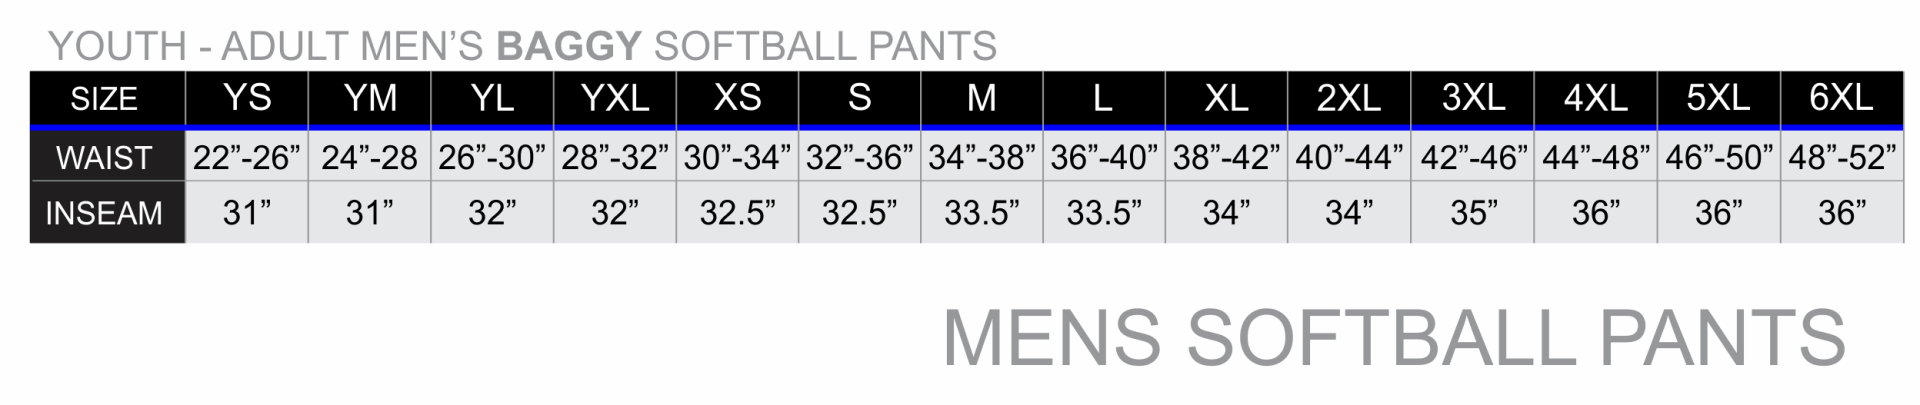 All over print men's softball pants sizing chart zexez